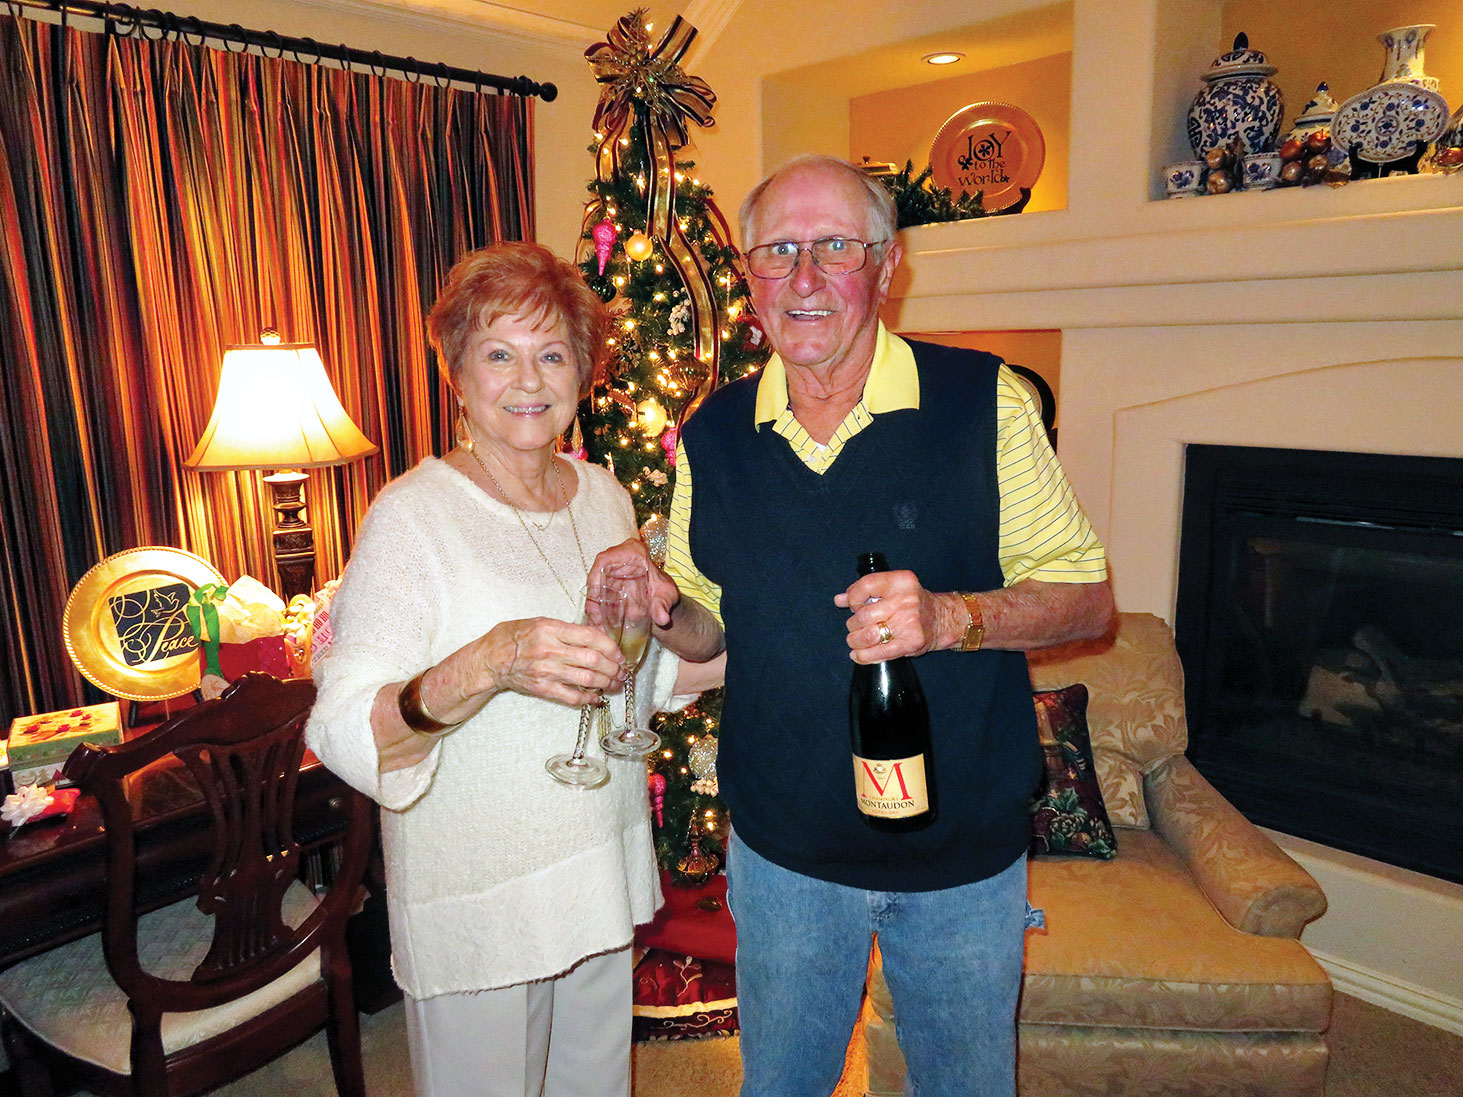 Celebrating the holiday season with hosts Mary Ann and Wayne Ballard